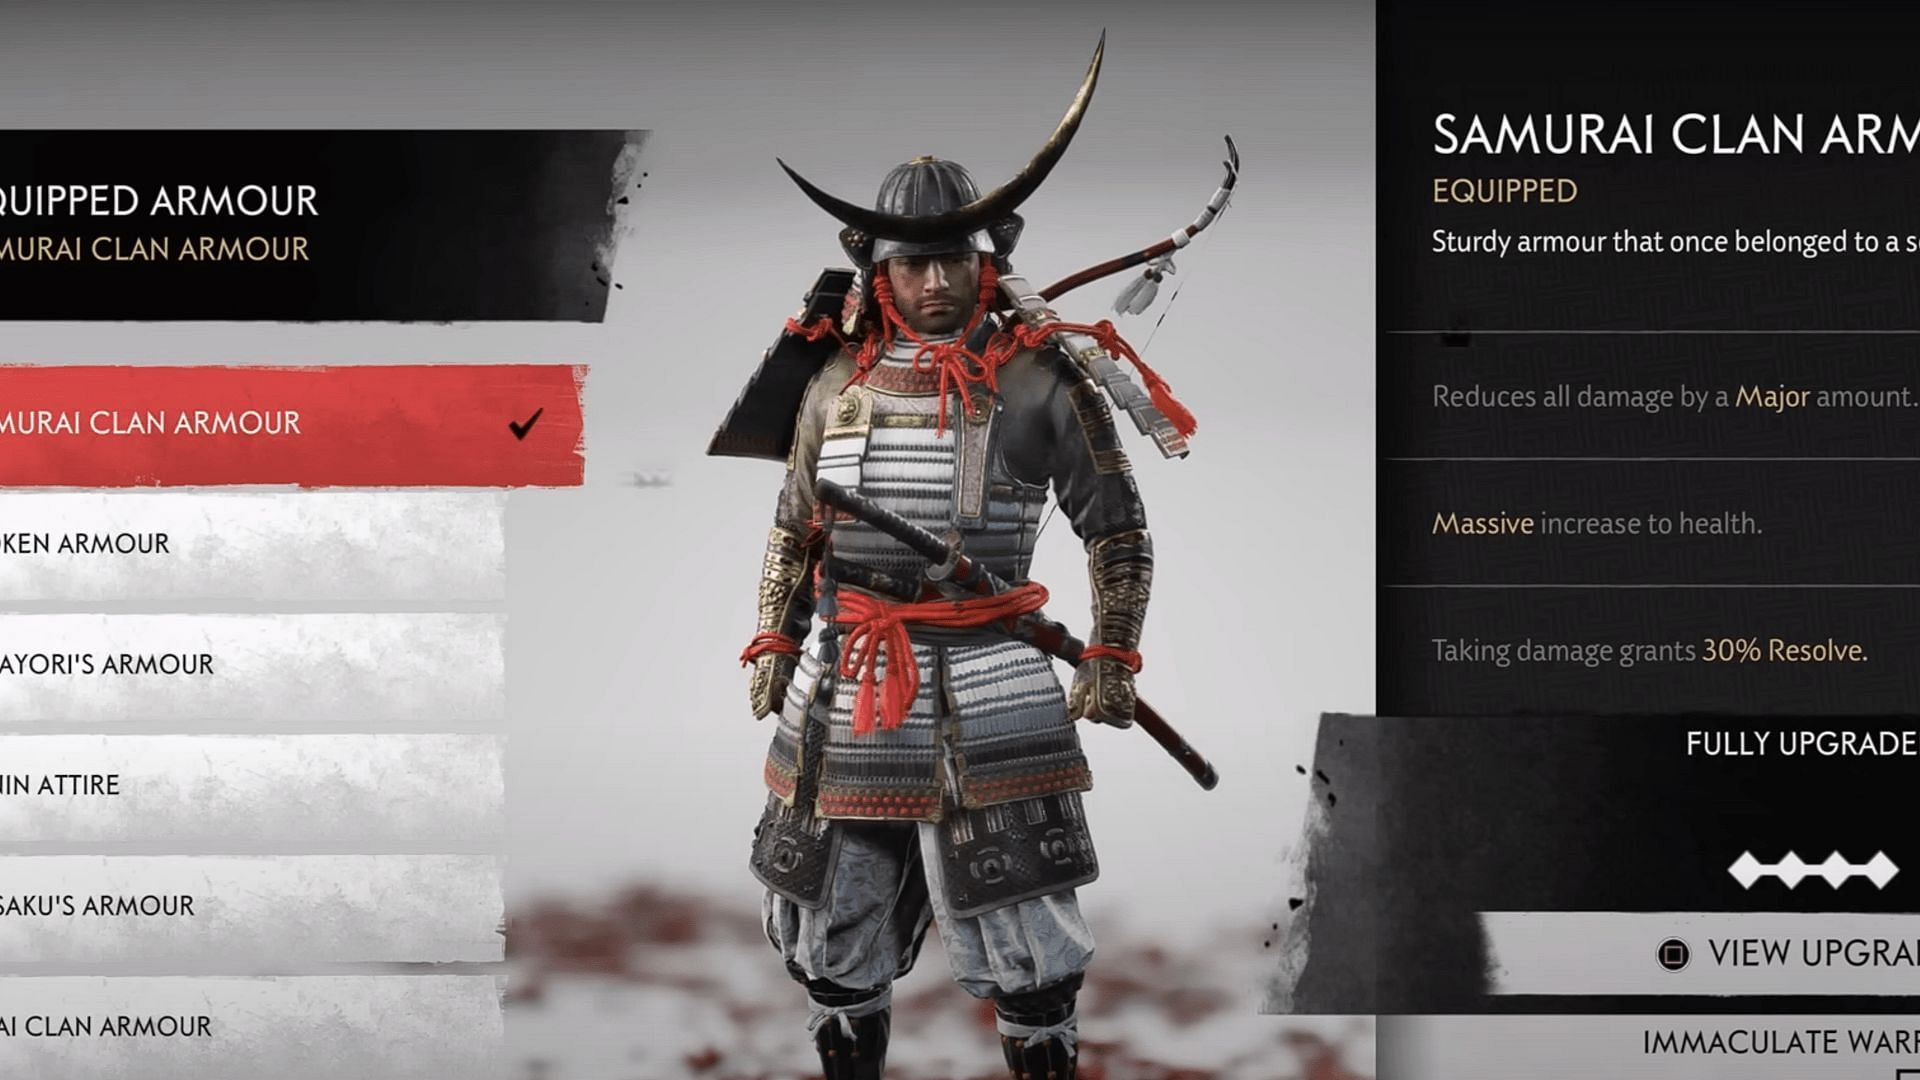 The Samurai Clan Armor set (Image via PlayStation)